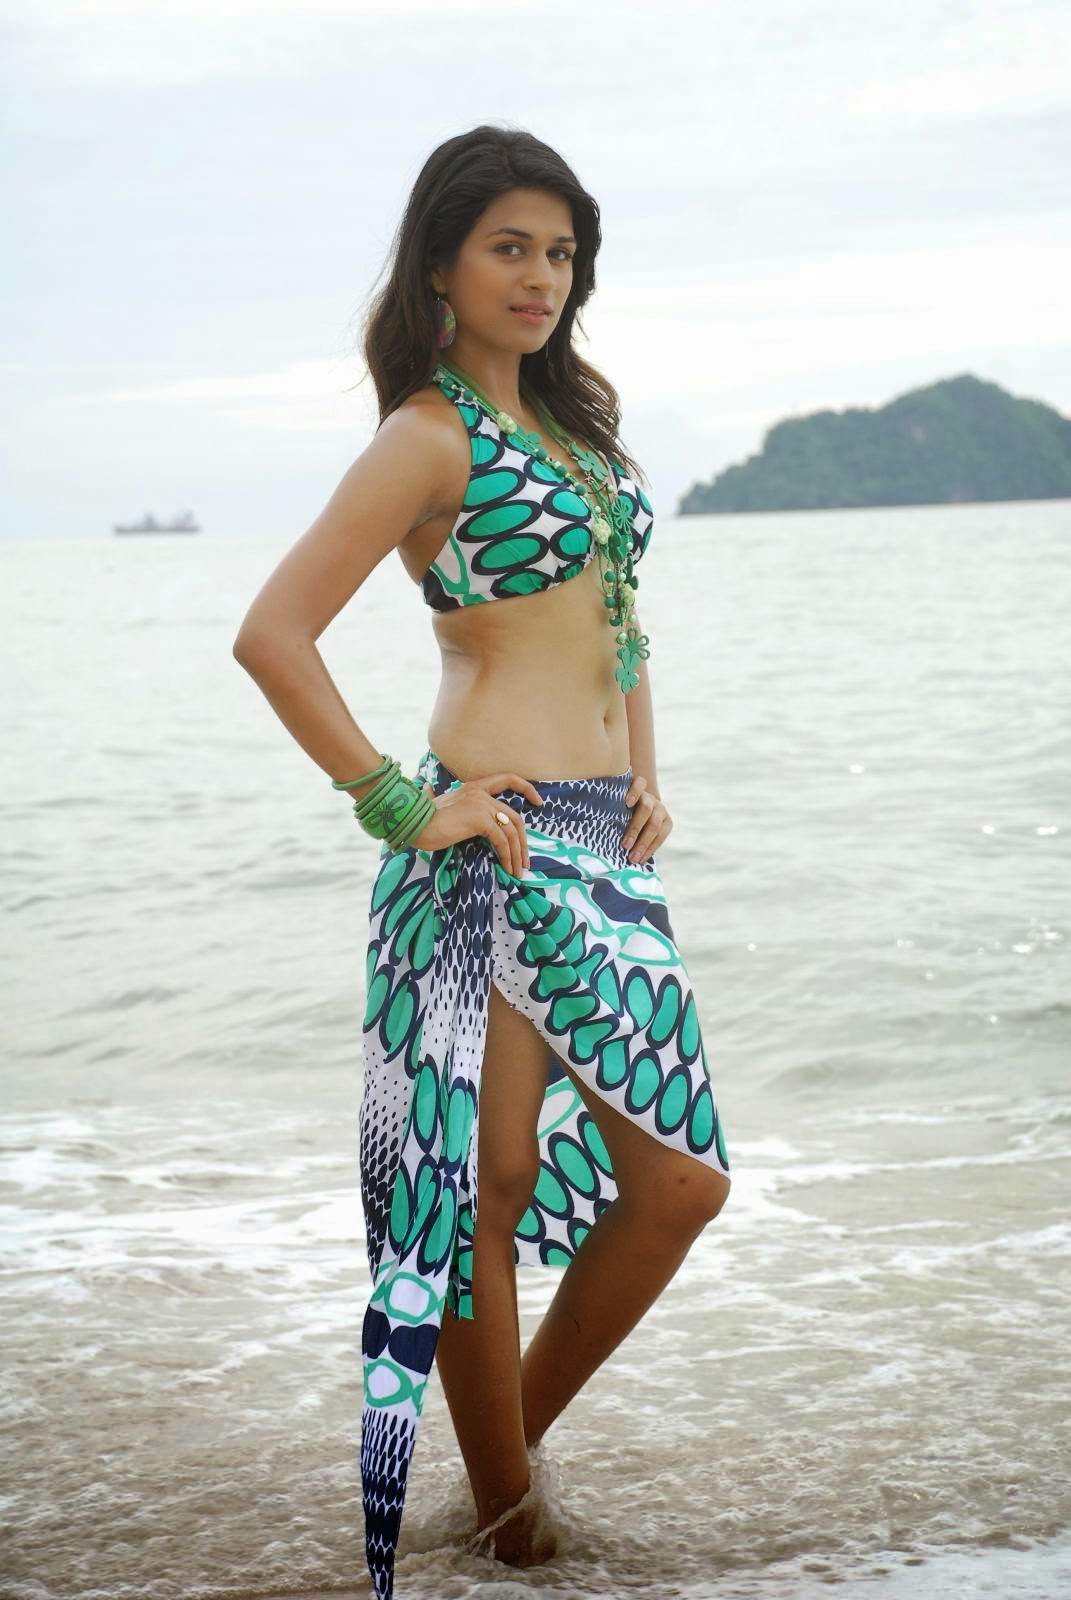 Shraddha Das Showcasing Her Amazing Body In a Colorful Bikini.